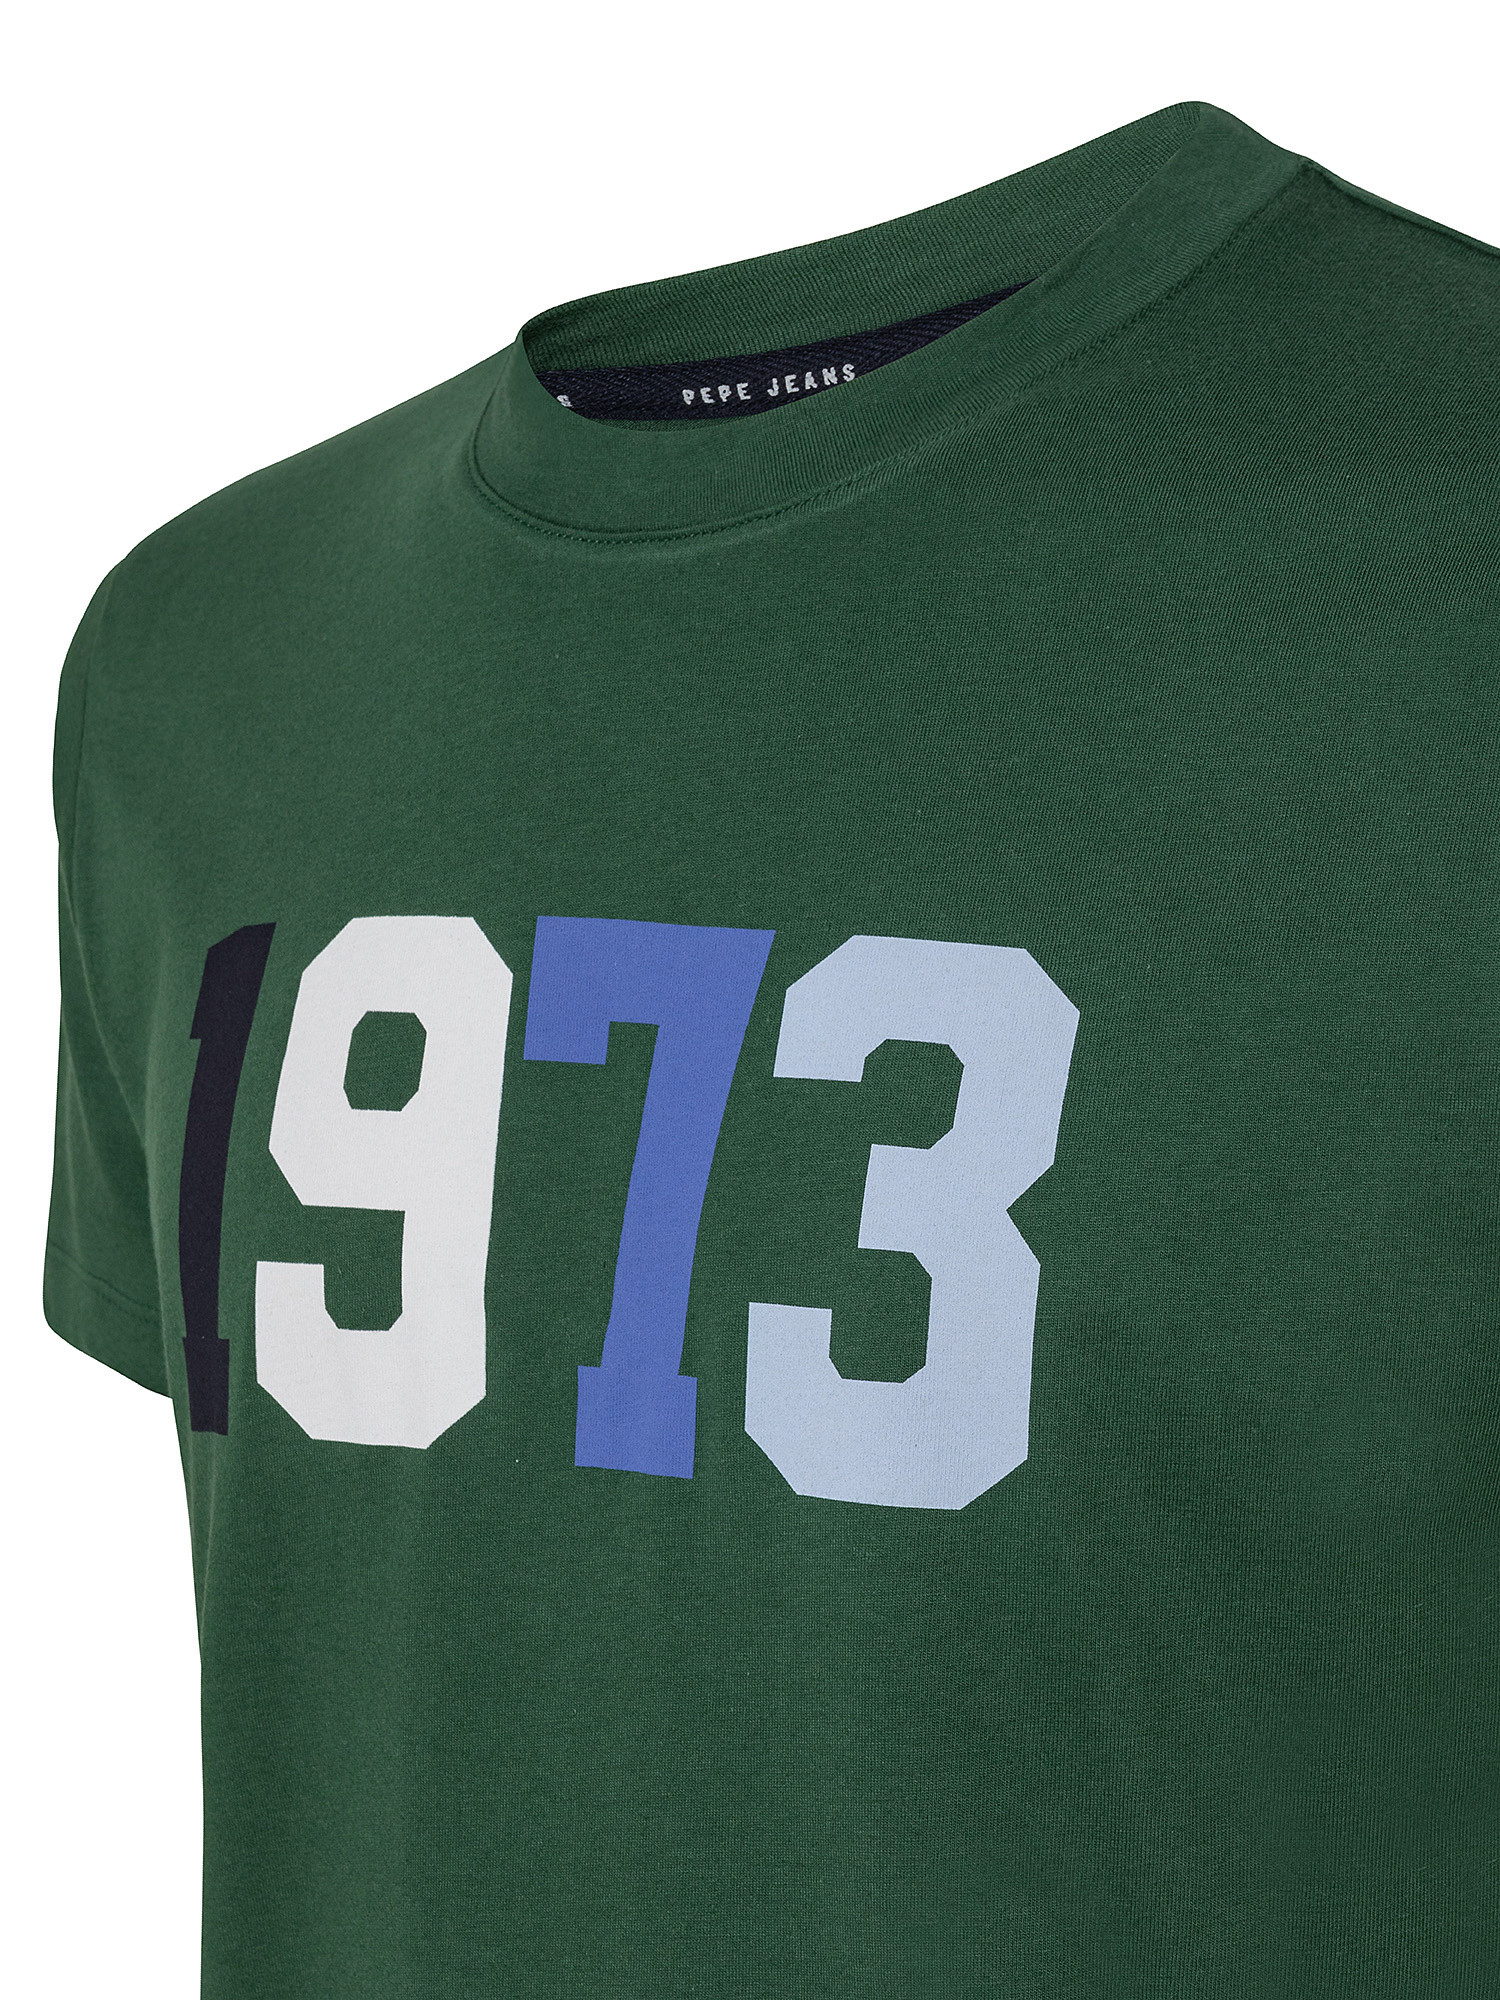 Totem cotton T-shirt, Green, large image number 2